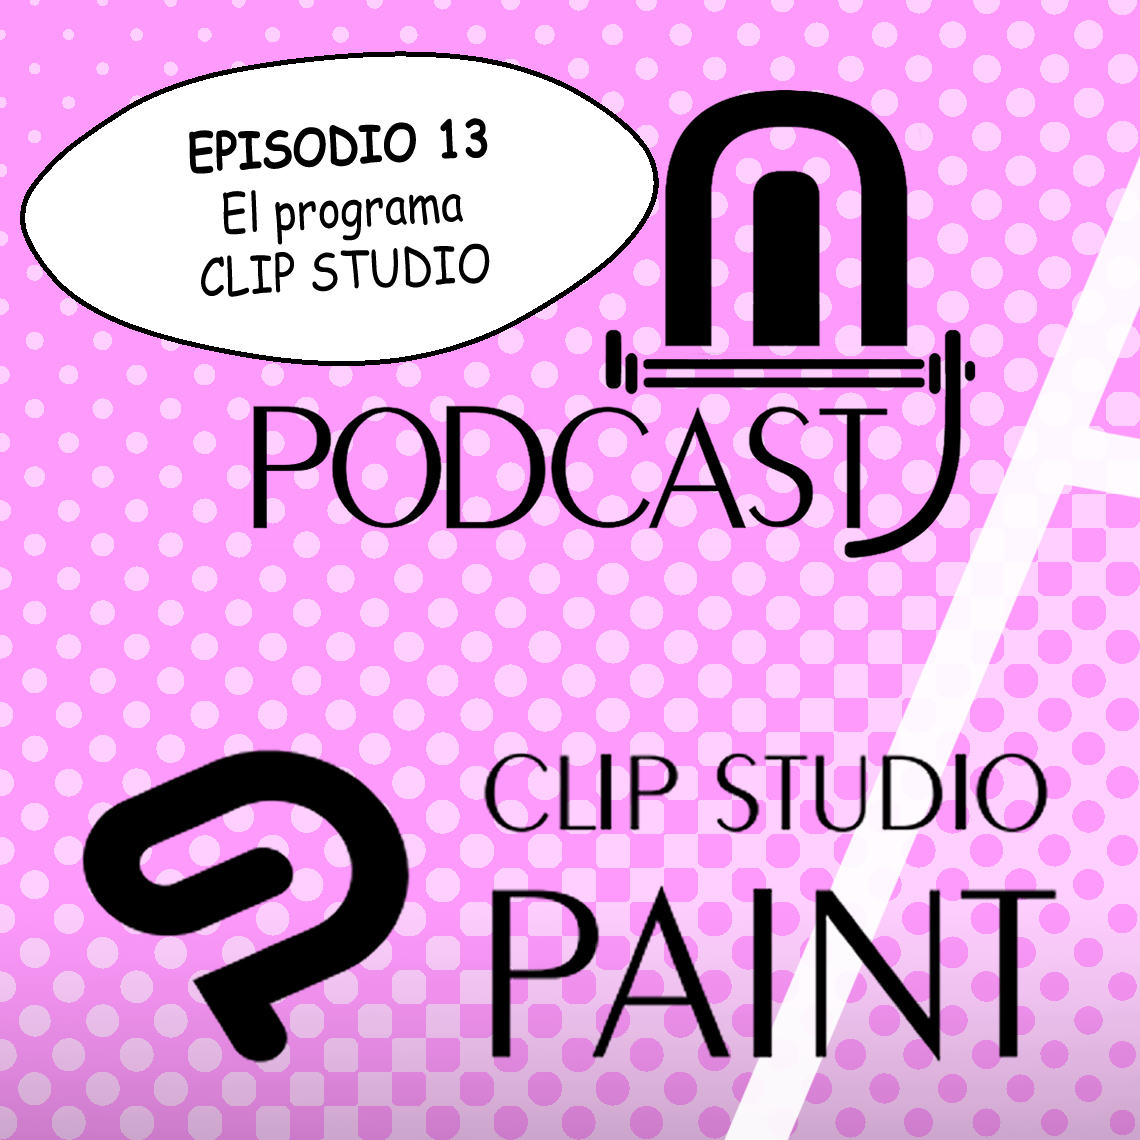 CSP episodio 13. CLIP STUDIO, el programa que acompaña a CLIP STUDIO PAINT